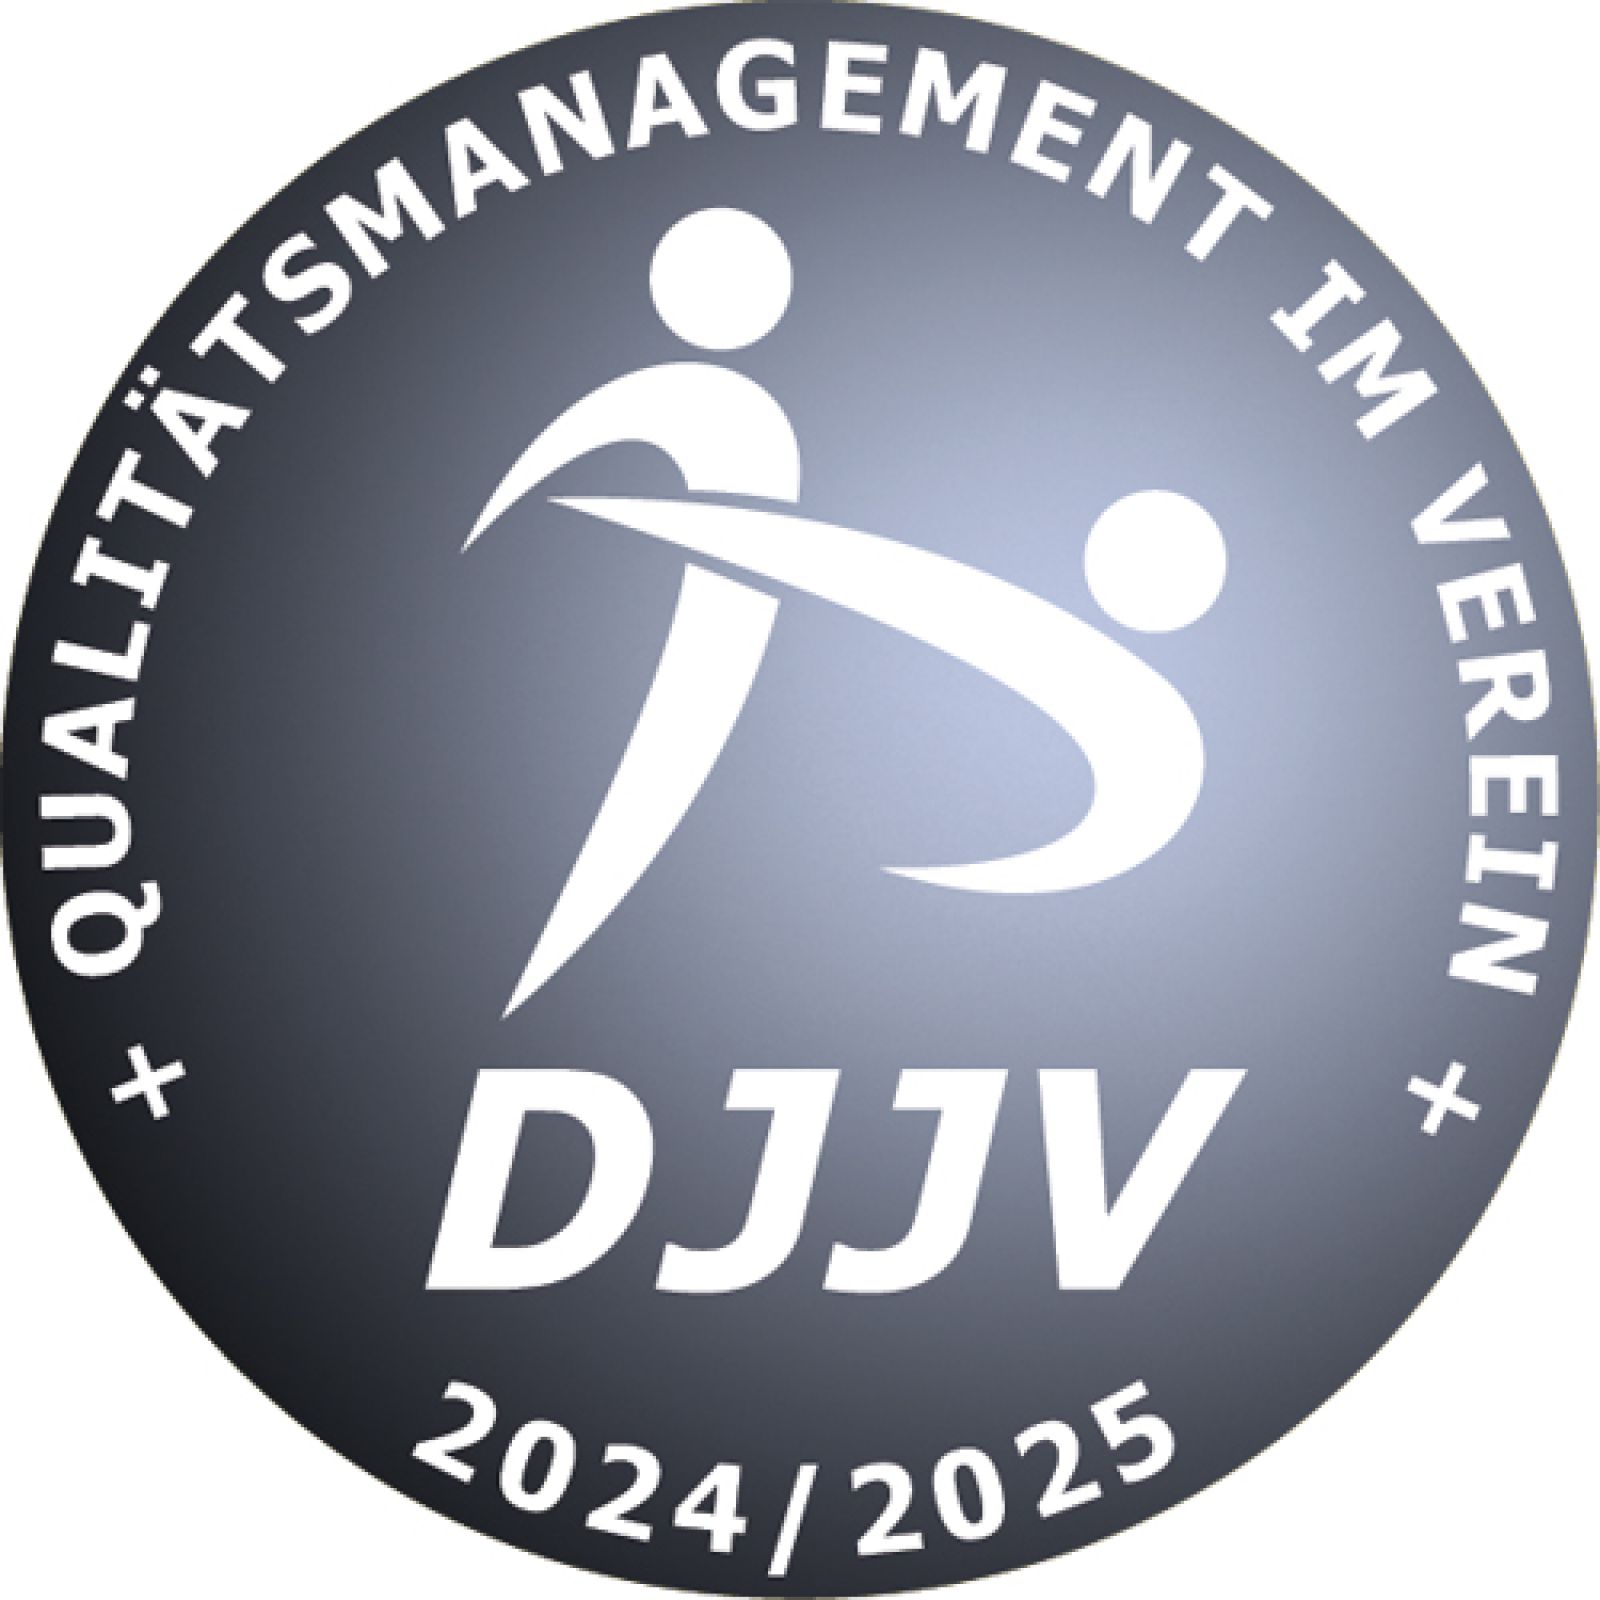 Judo-Club Limburg erhält Gütesiegel des DJJV